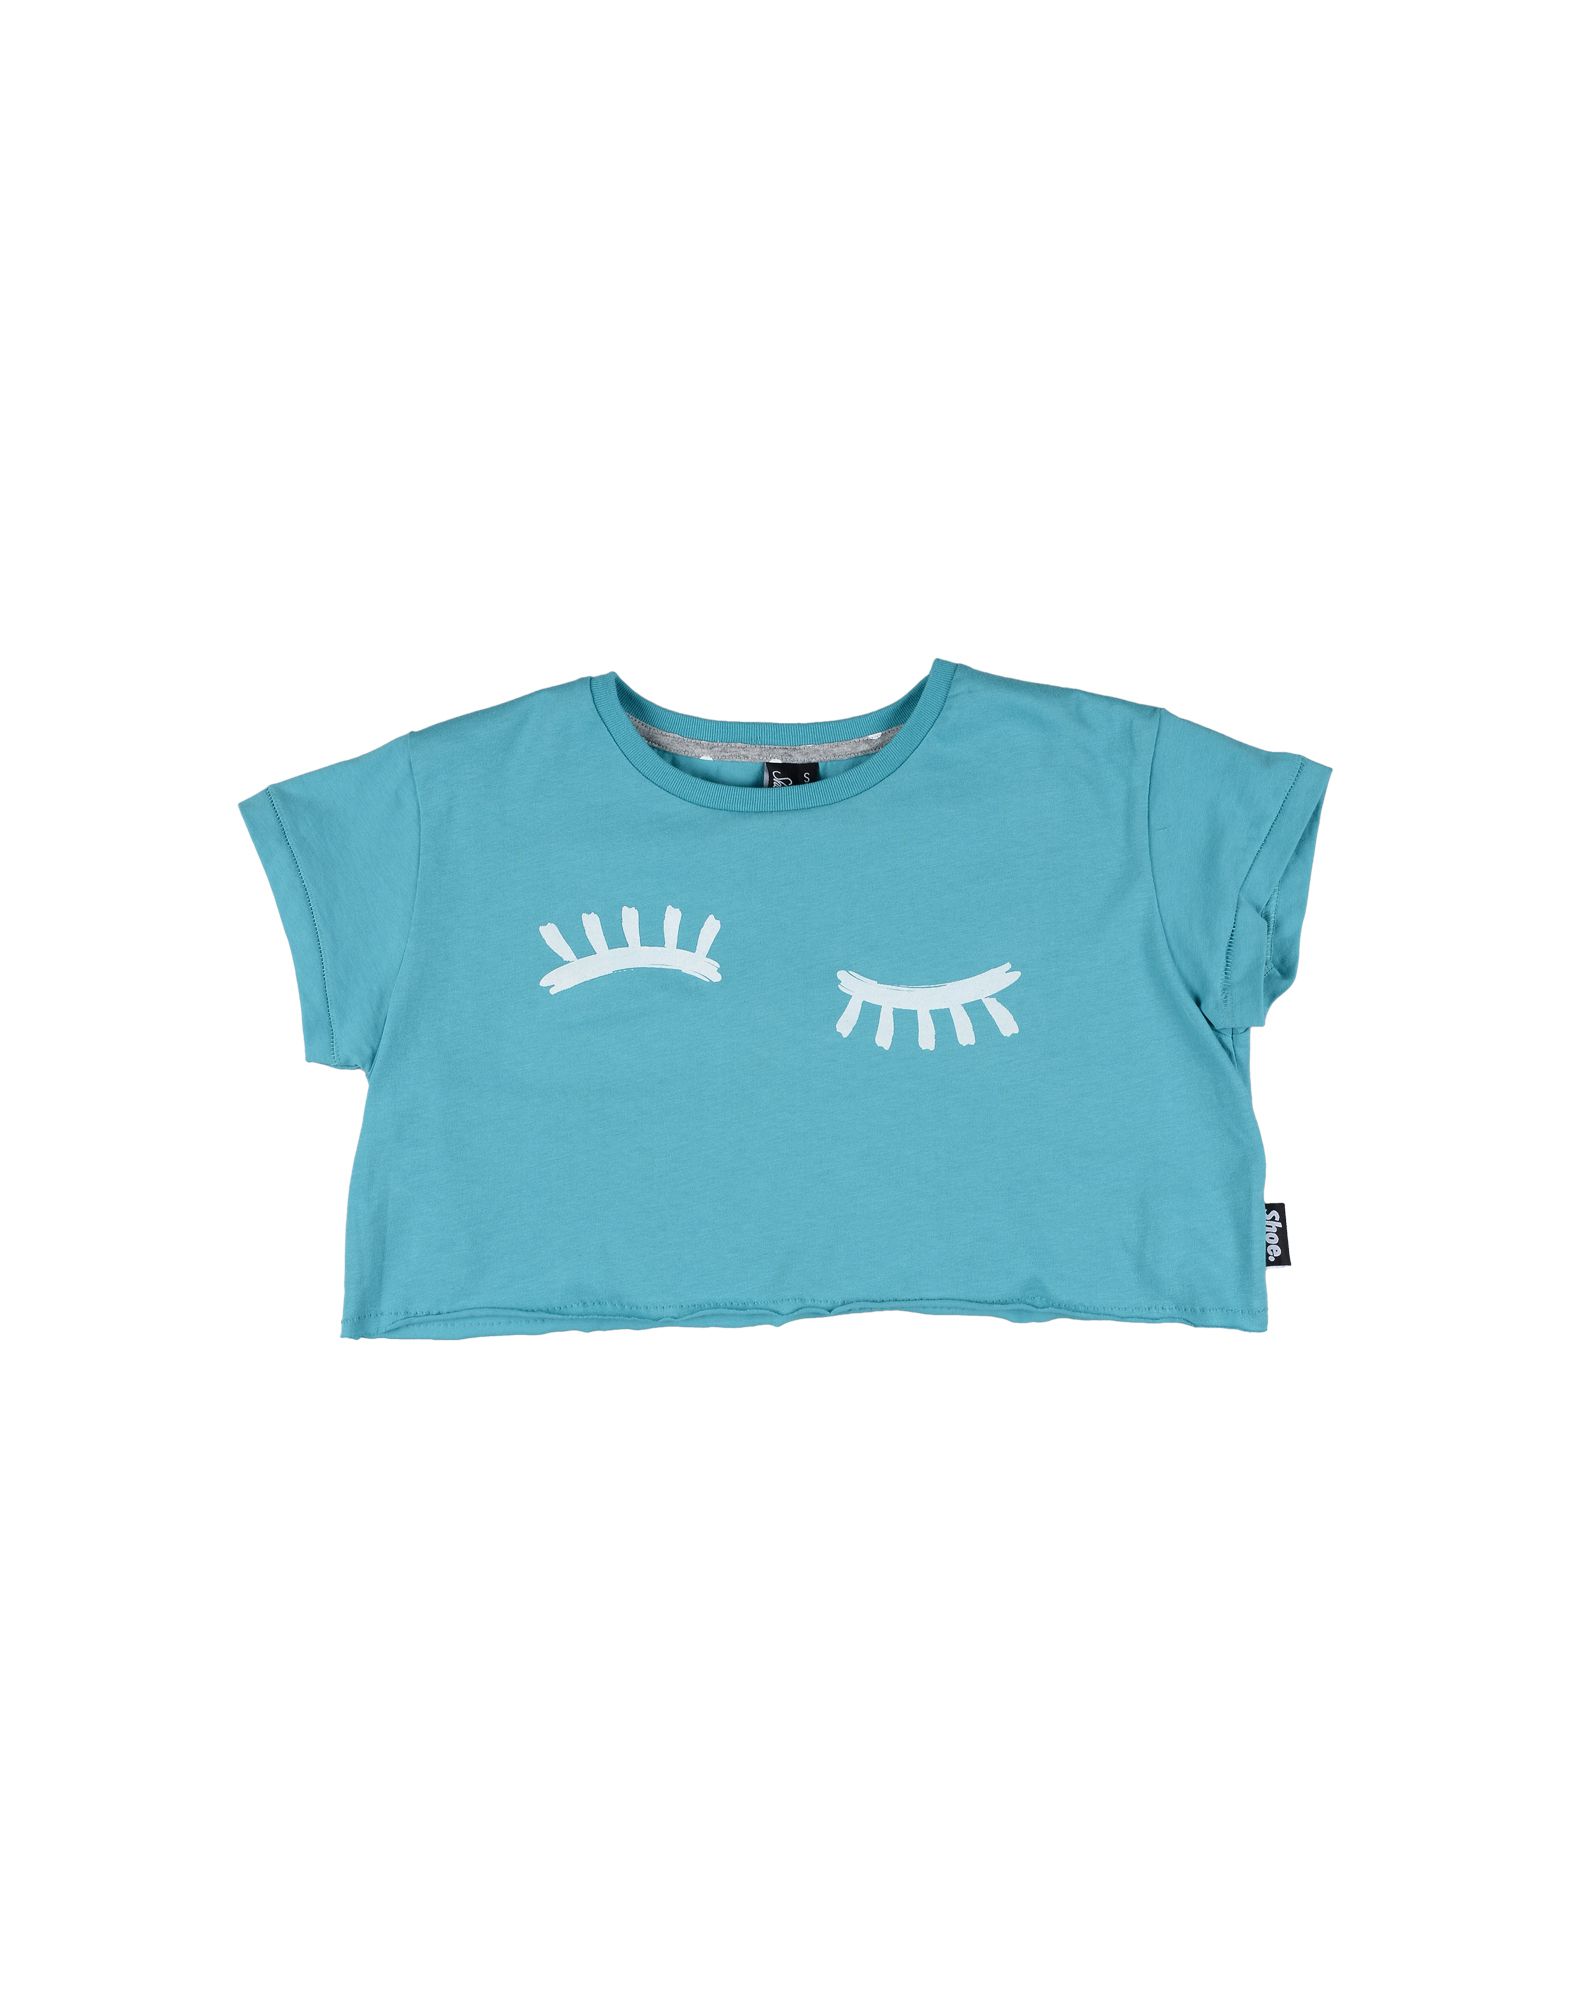 Shoeshine Kids' T-shirts In Turquoise